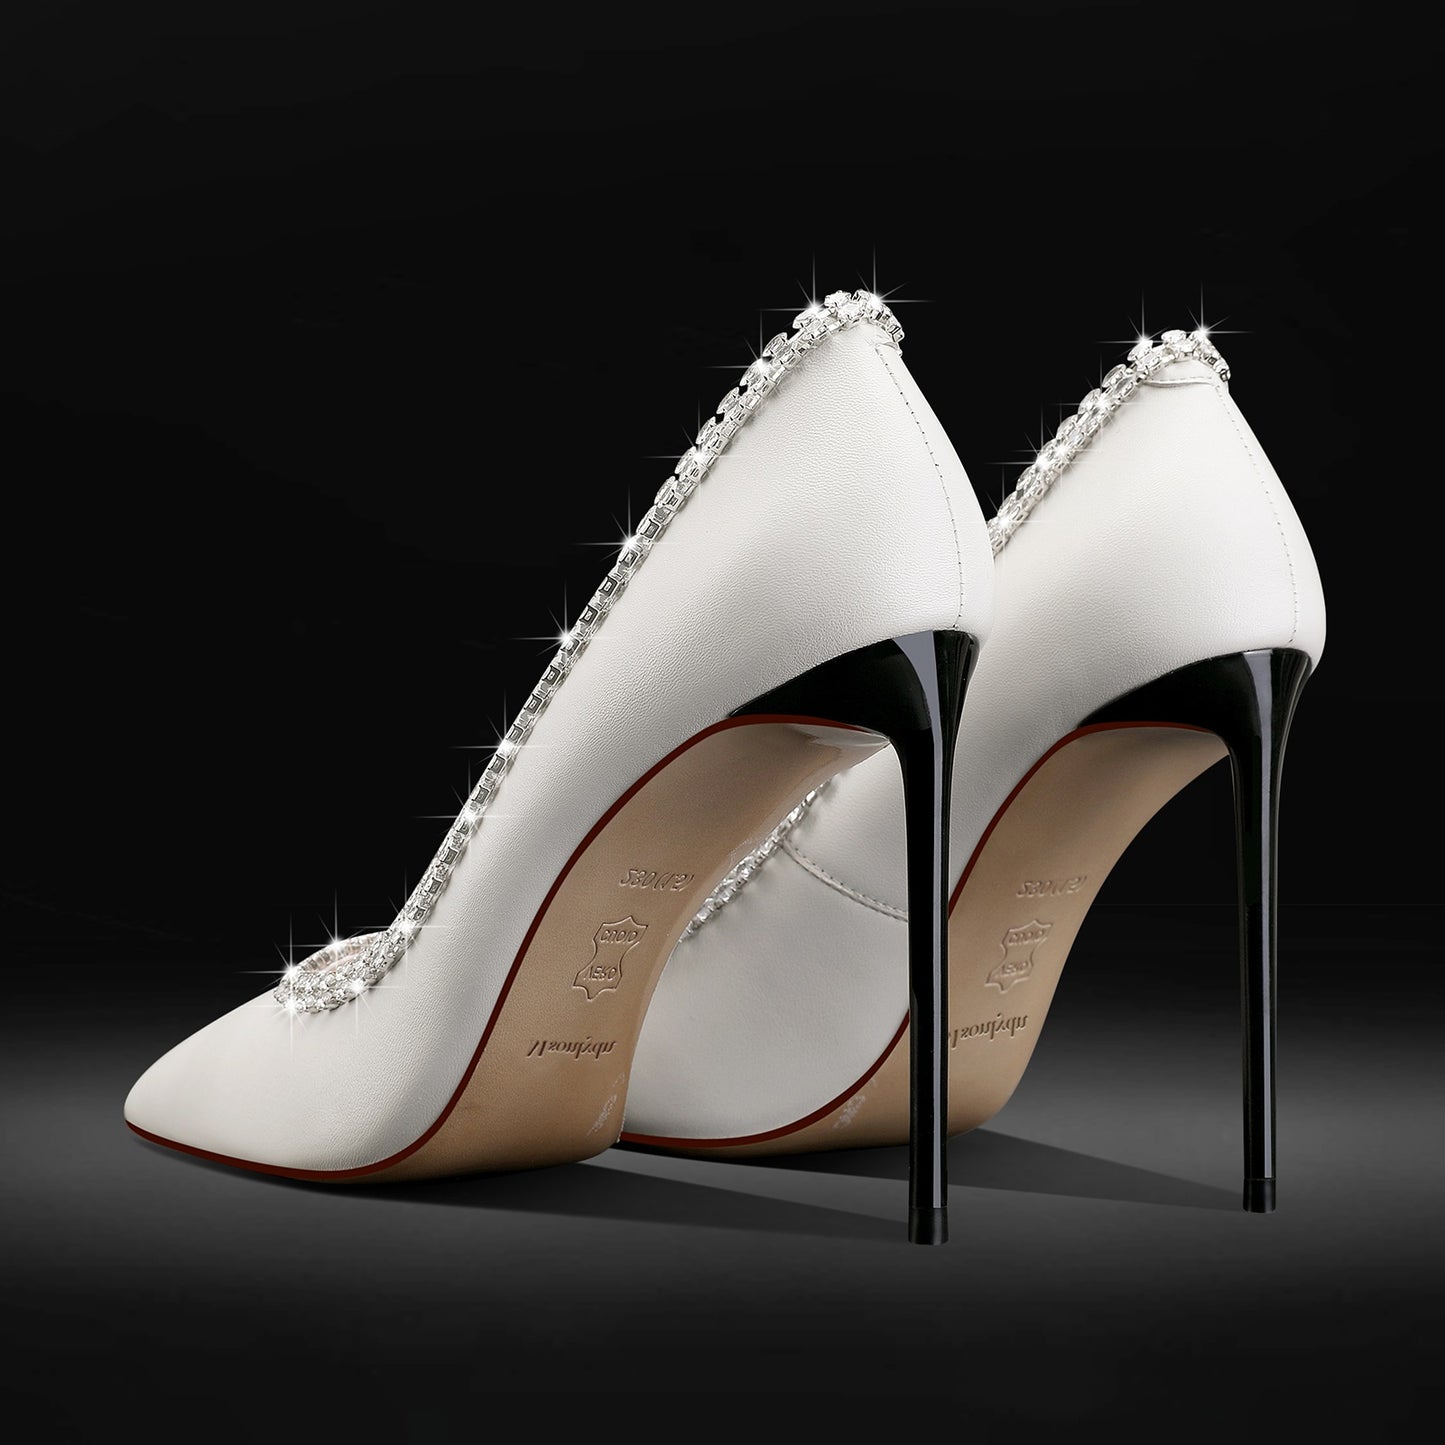 Stylish & Comfortable High Heel Stiletto Pumps for Women -  Leather Dress Pumps Heels